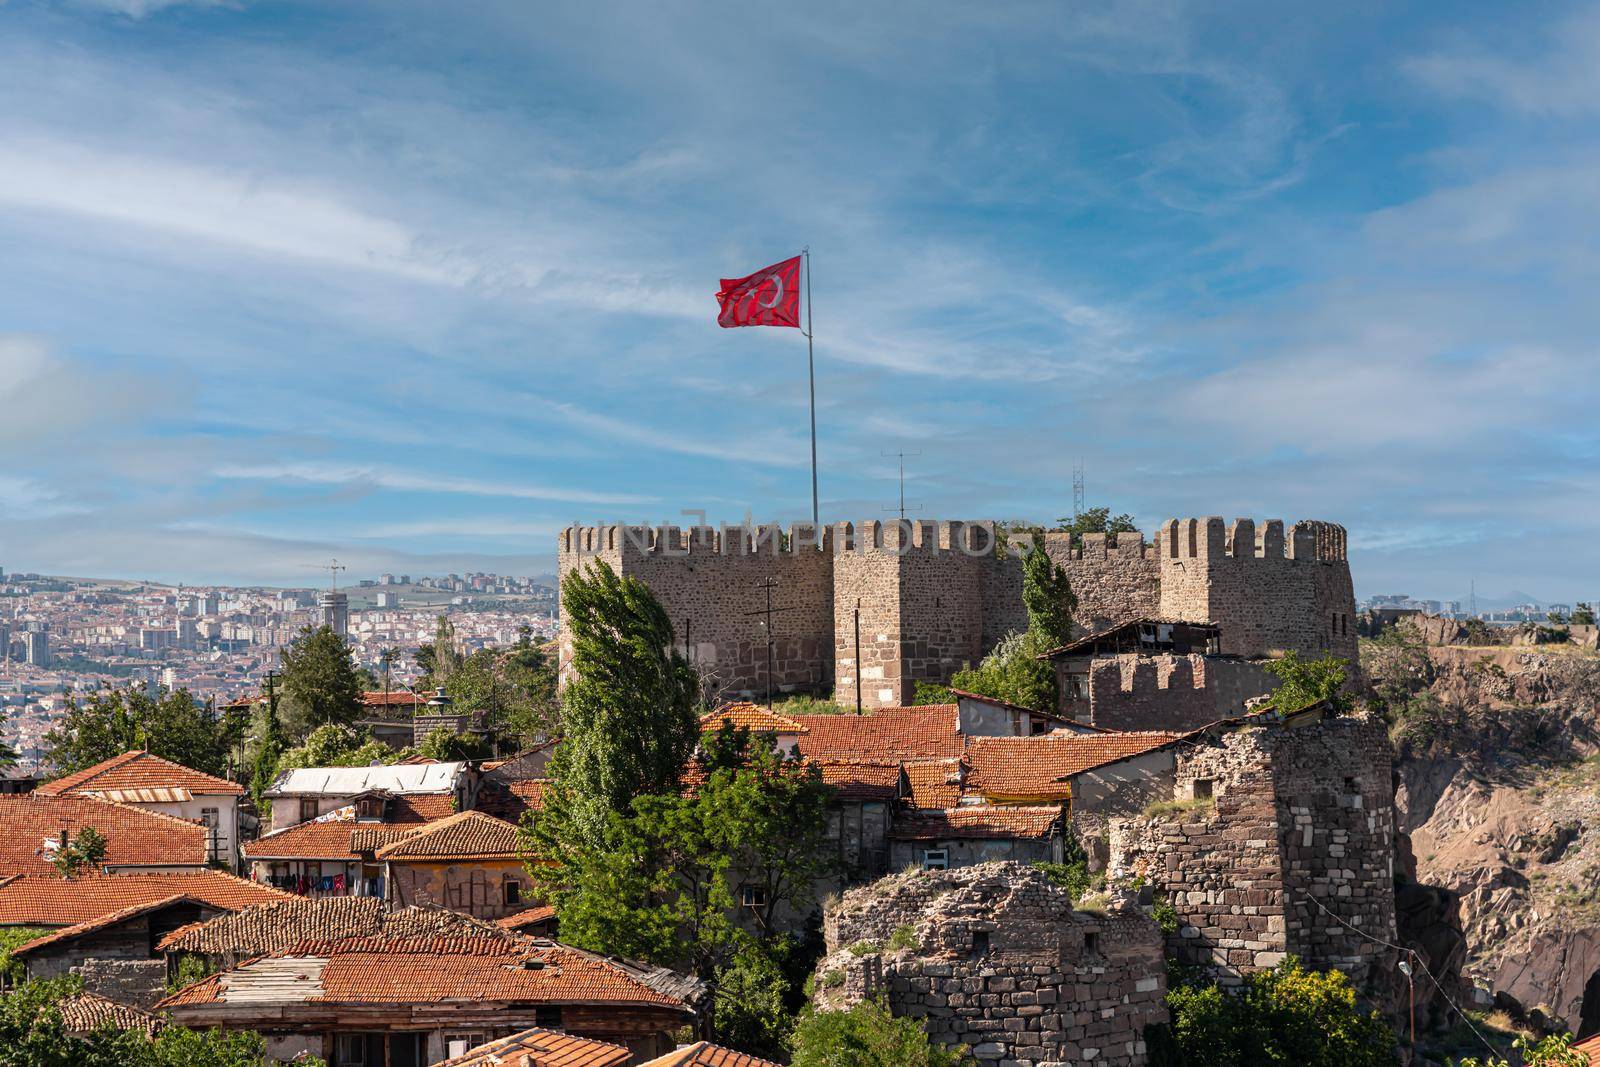 Ankara Castle with the Turkish flag flying over it. Turkish name is Ankara Kalesi